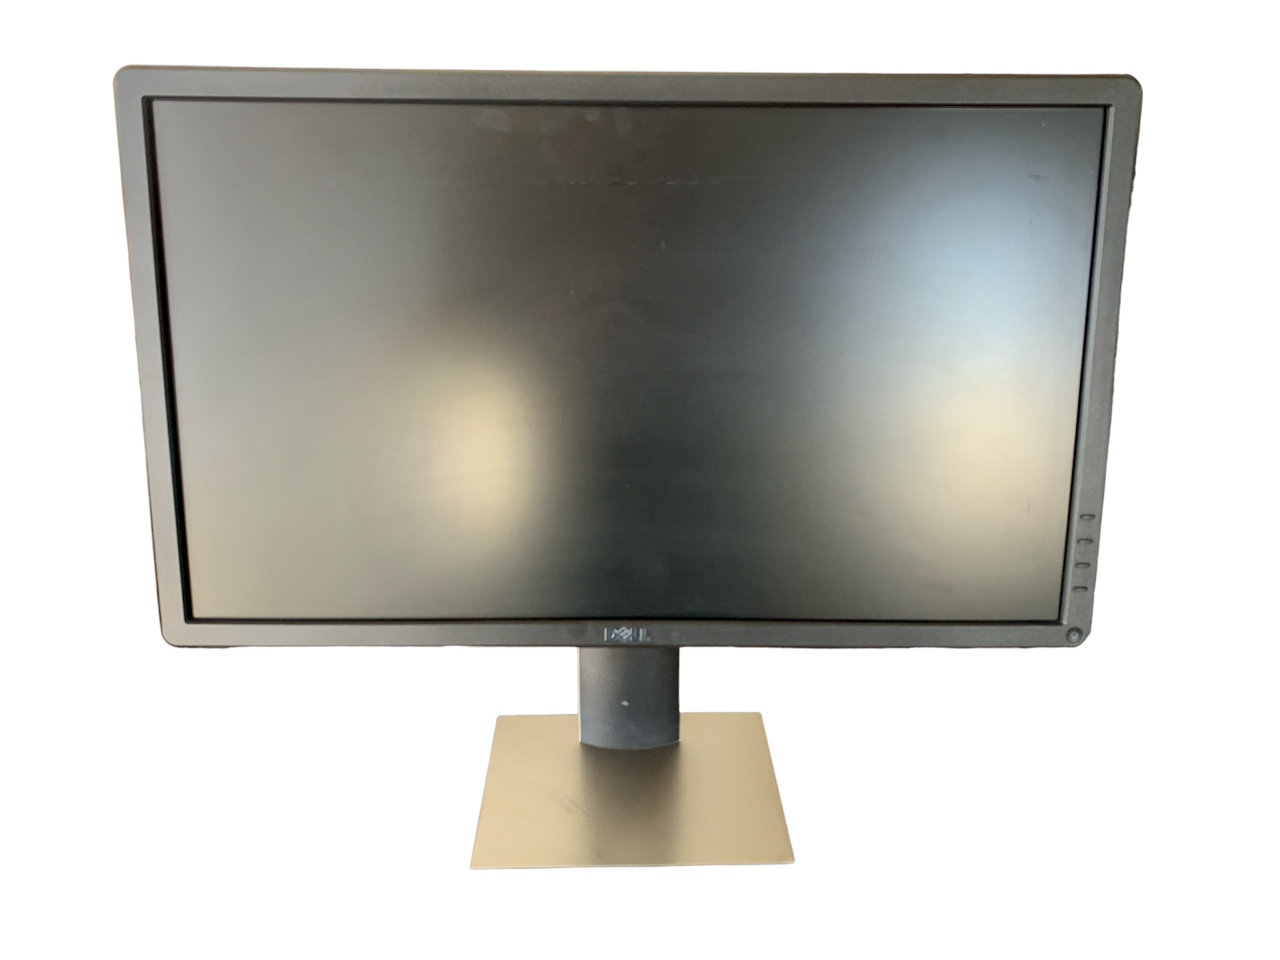 Dell E2414Ht 24" LED LCD Full HD Monitor w/ VGA & DVI-D Ports, 60Hz, 1920x1080p